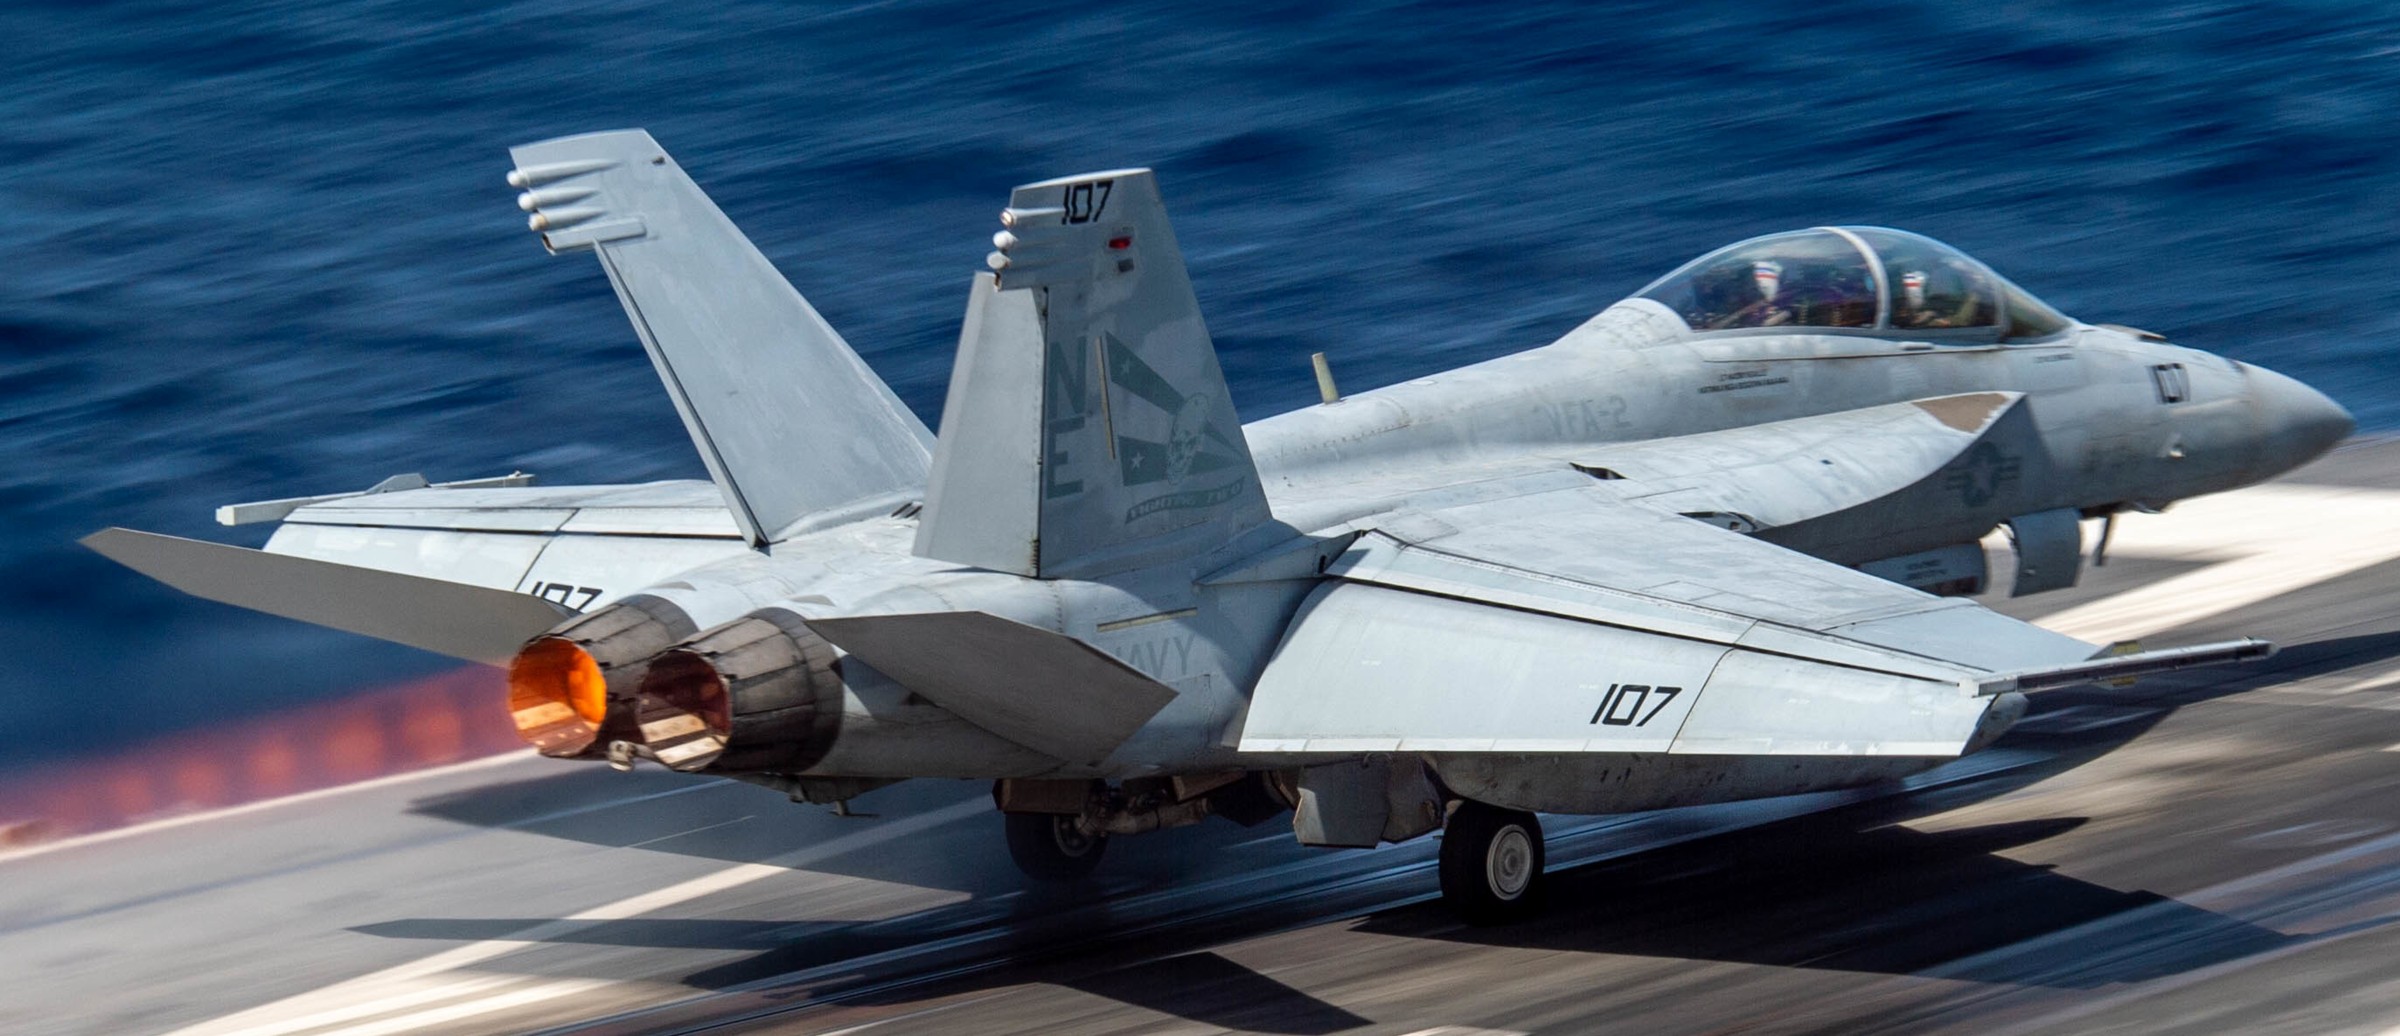 vfa-2 bounty hunters strike fighter squadron us navy f/a-18f super hornet carrier air wing cvw-2 uss carl vinson cvn-70 97